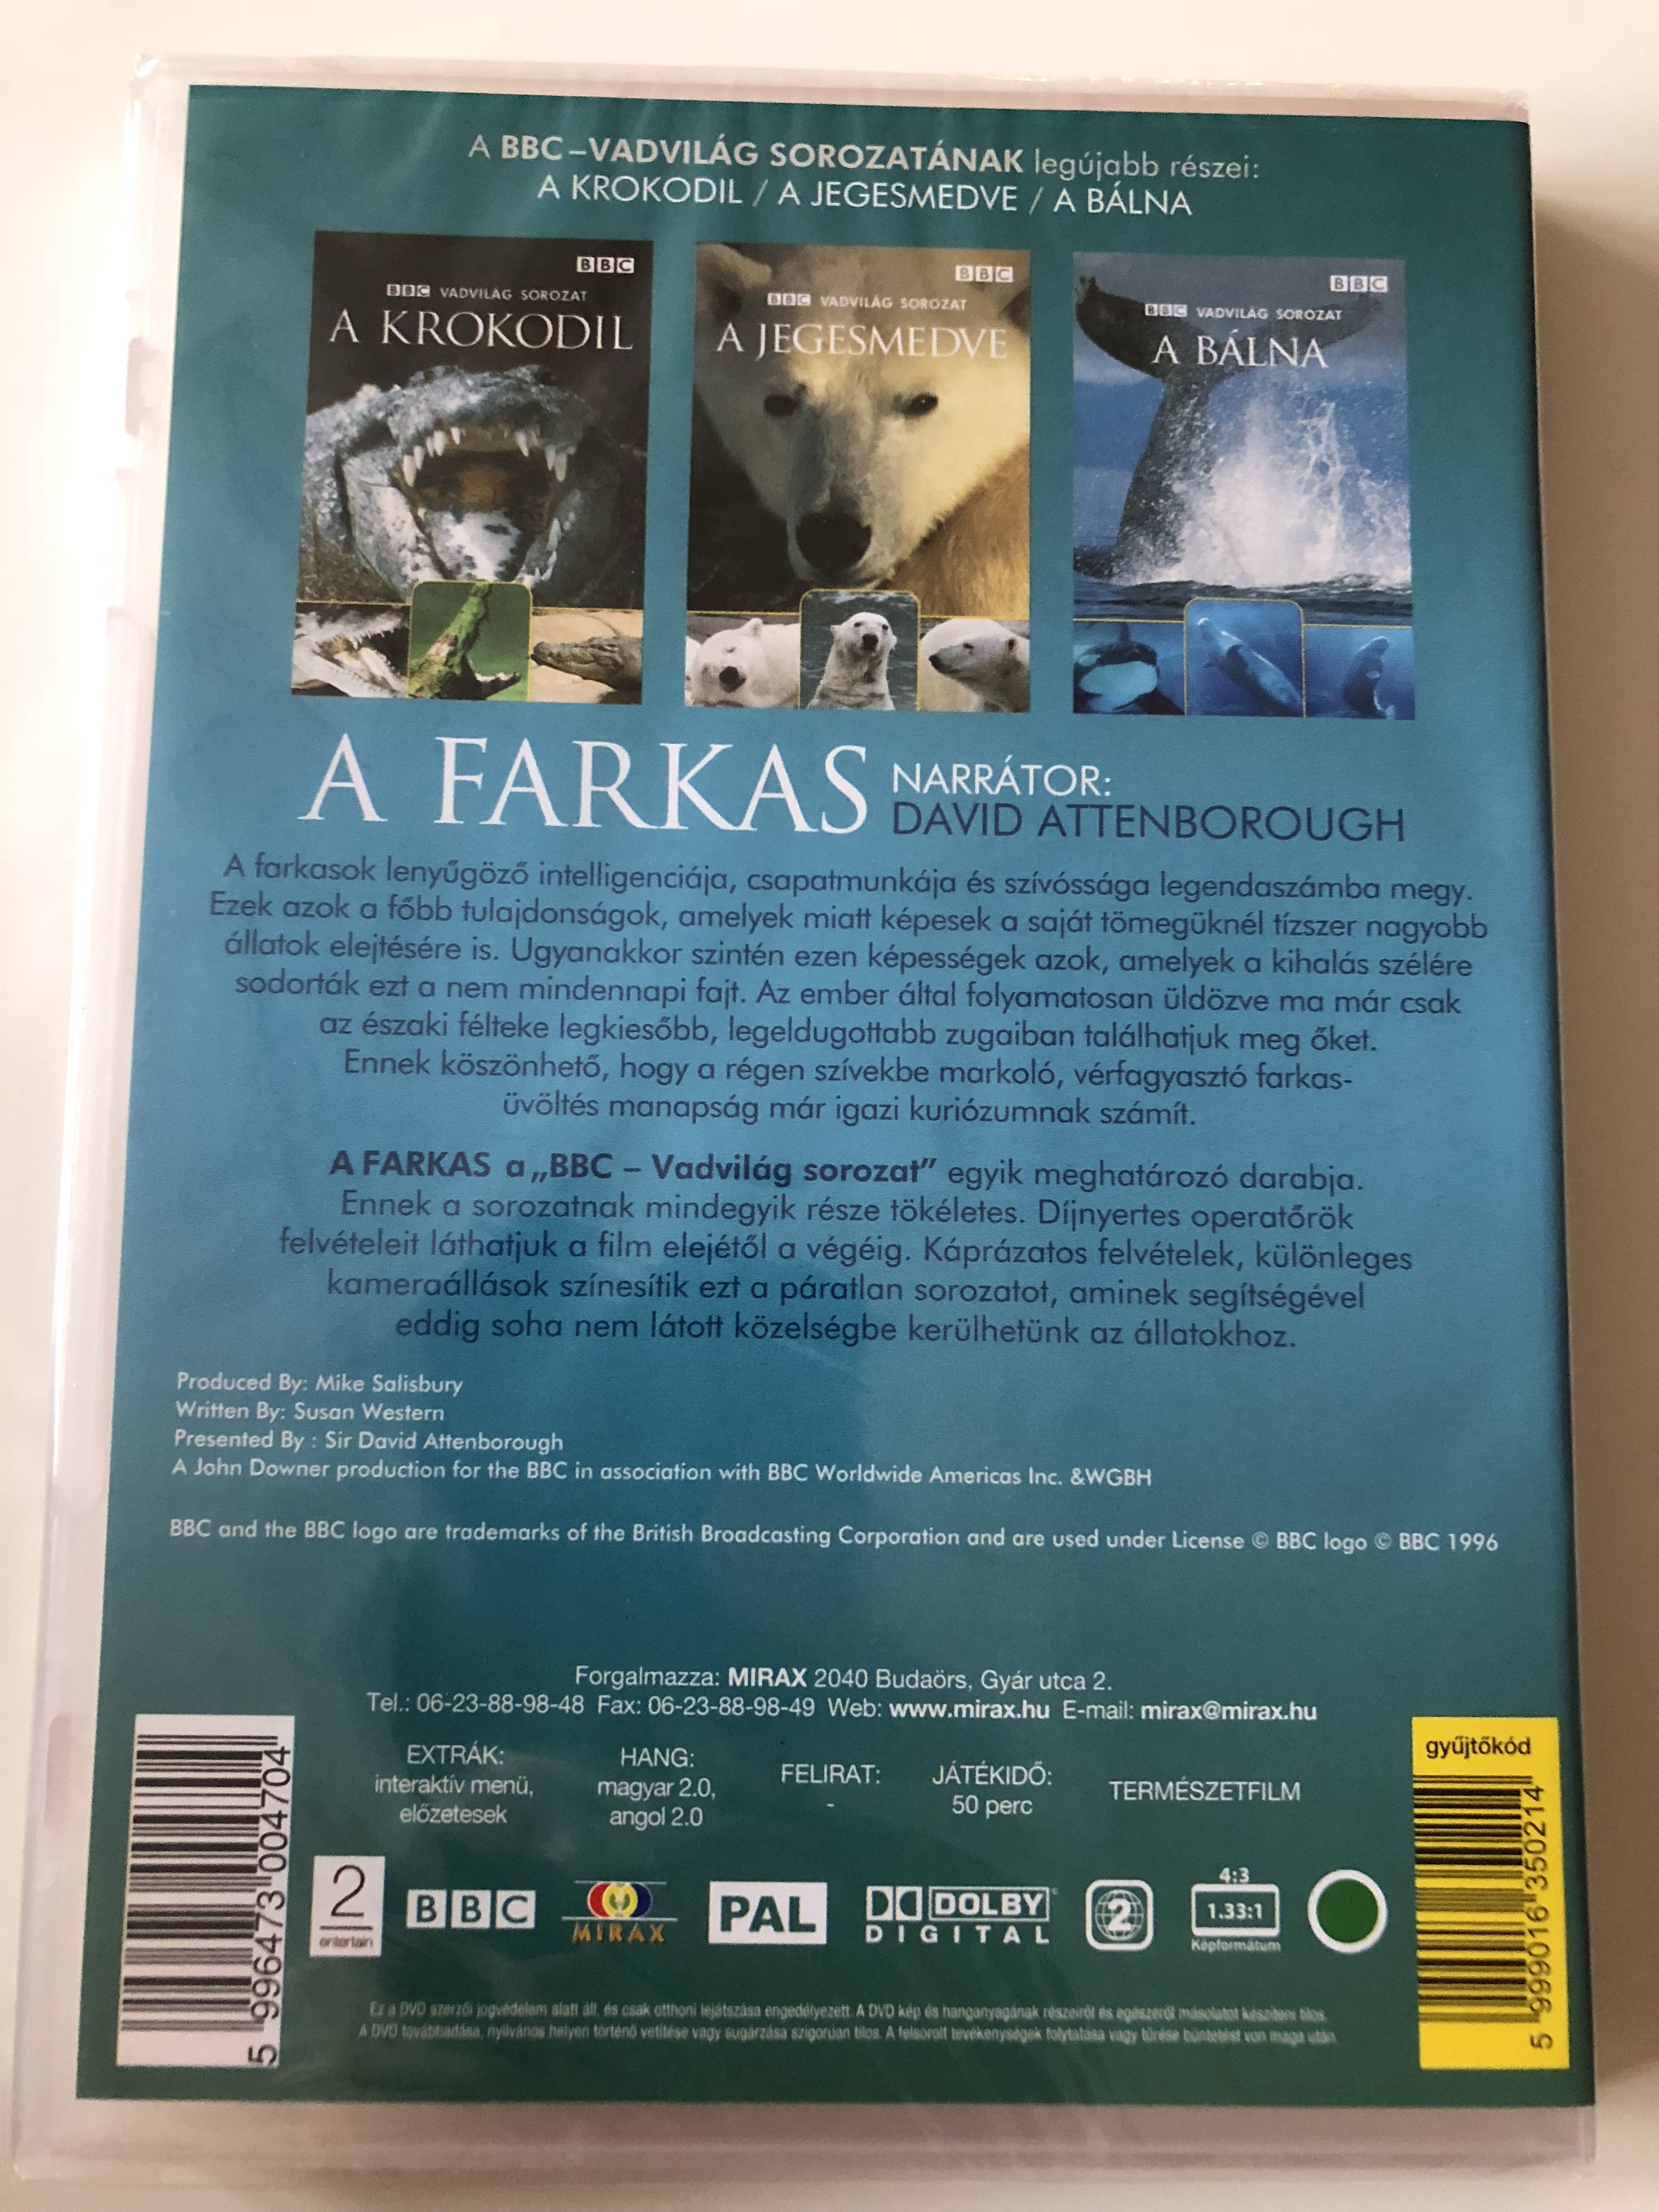 a-farkas-the-wolf-bbc-wildlife-series-narrated-by-sir-david-attenborough-hungarian-version.jpg